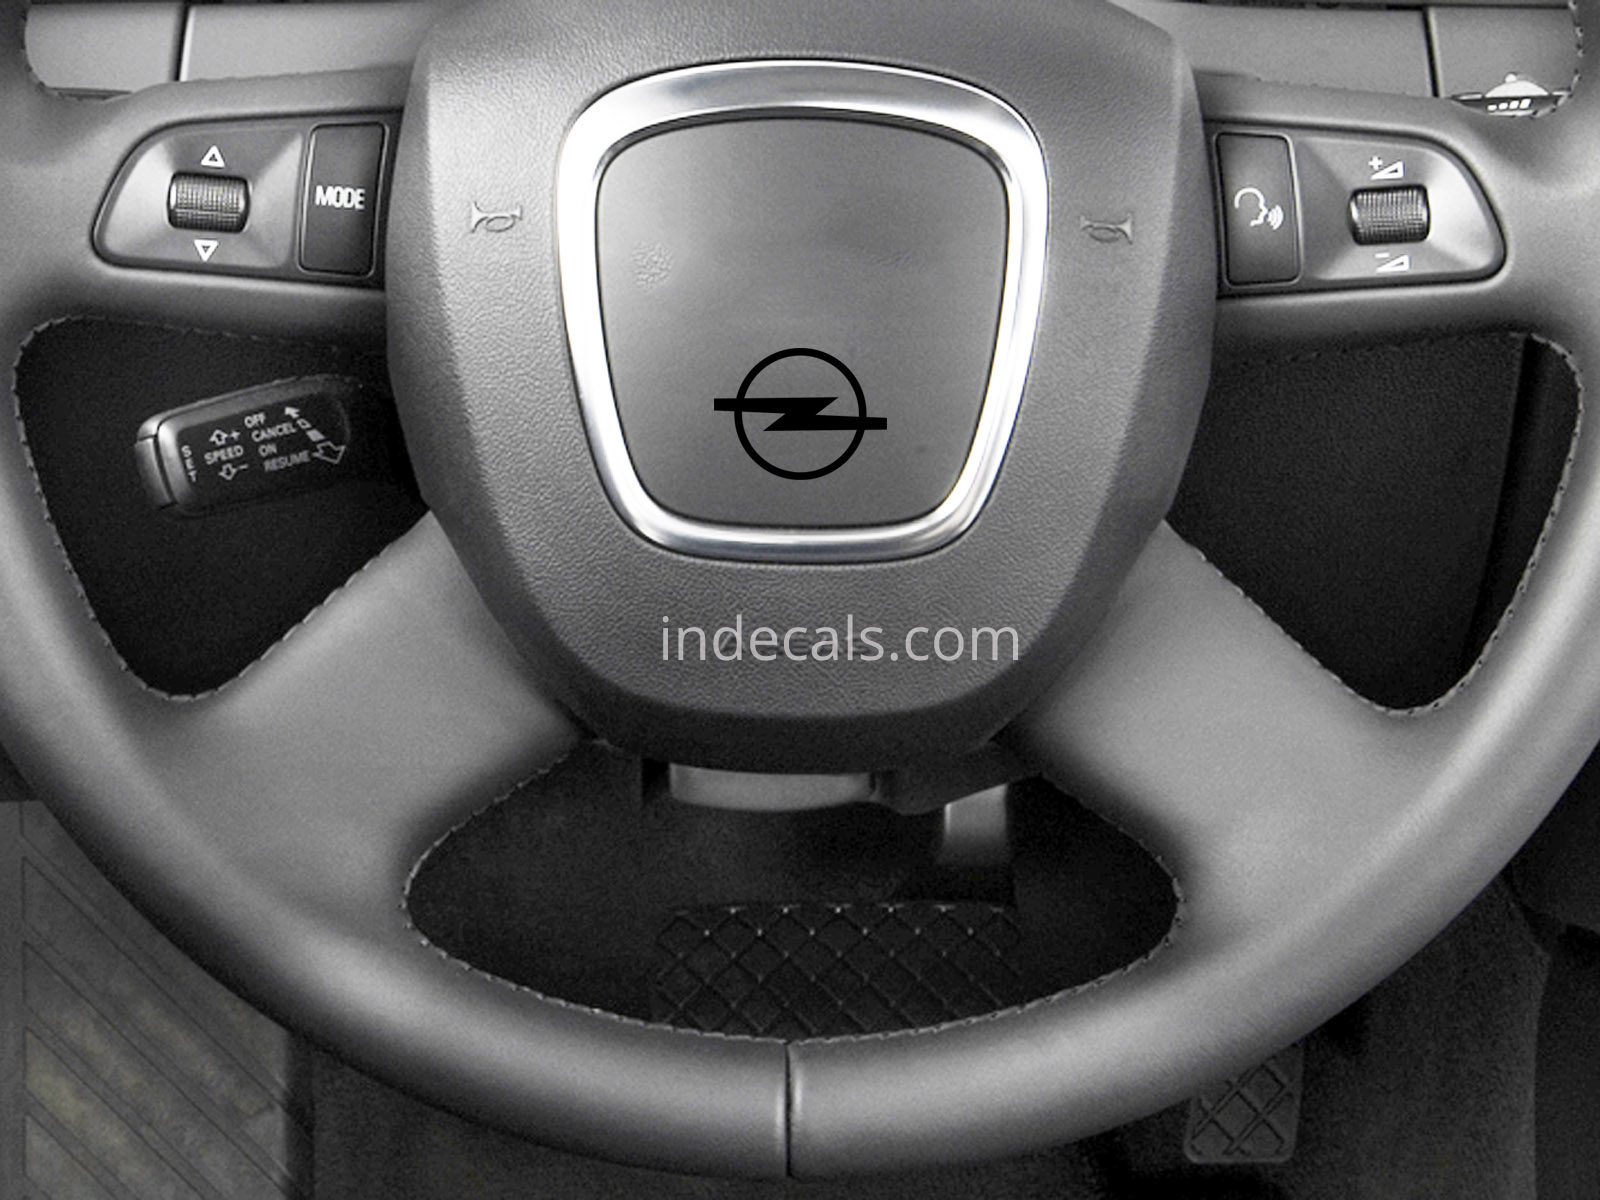 3 x Opel Stickers for Steering Wheel - Black